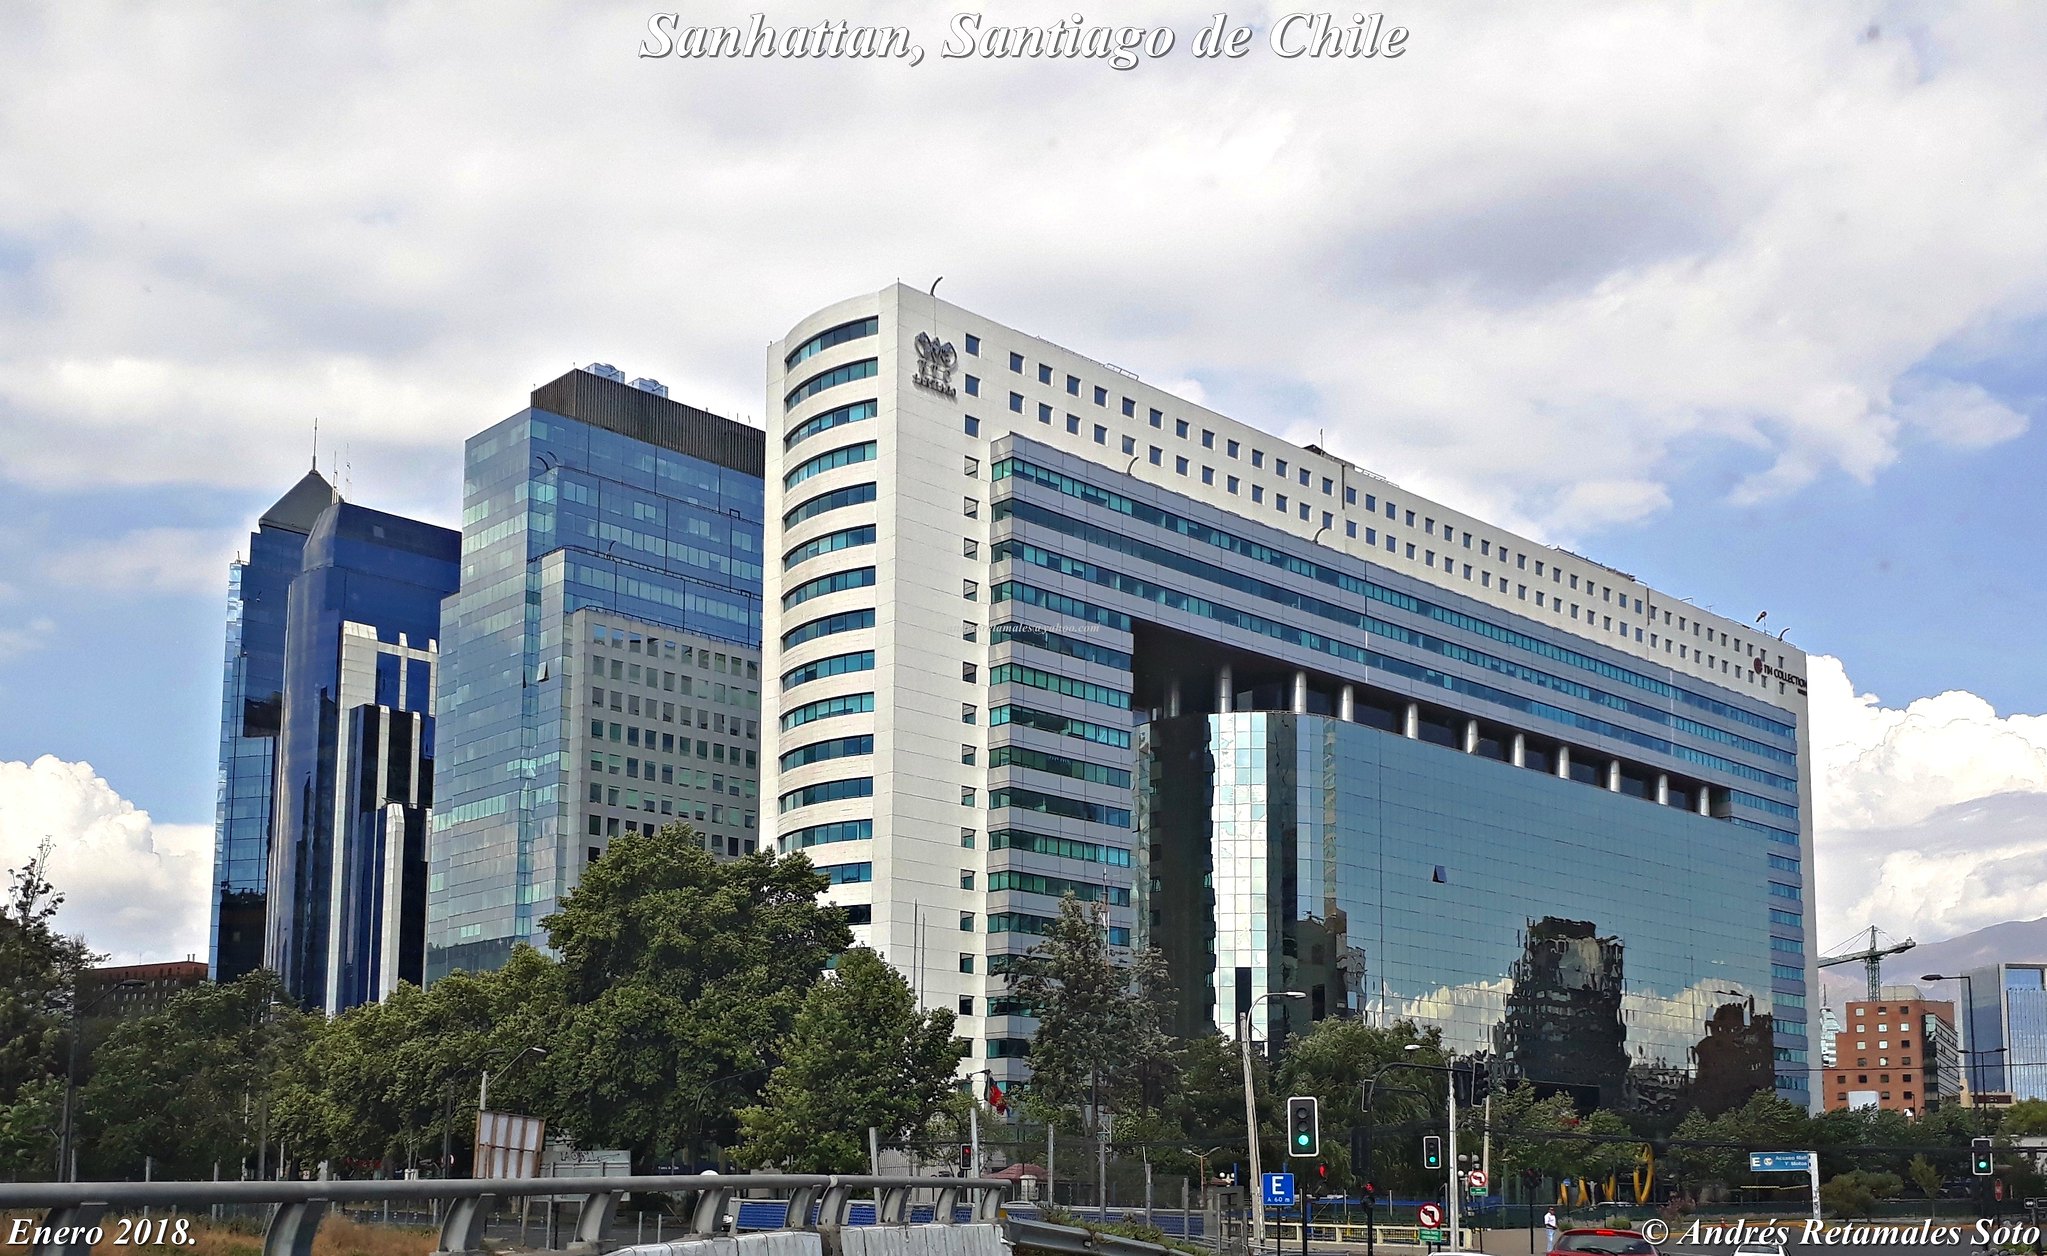 Sanhattan, Santiago de Chile, Enero 2018